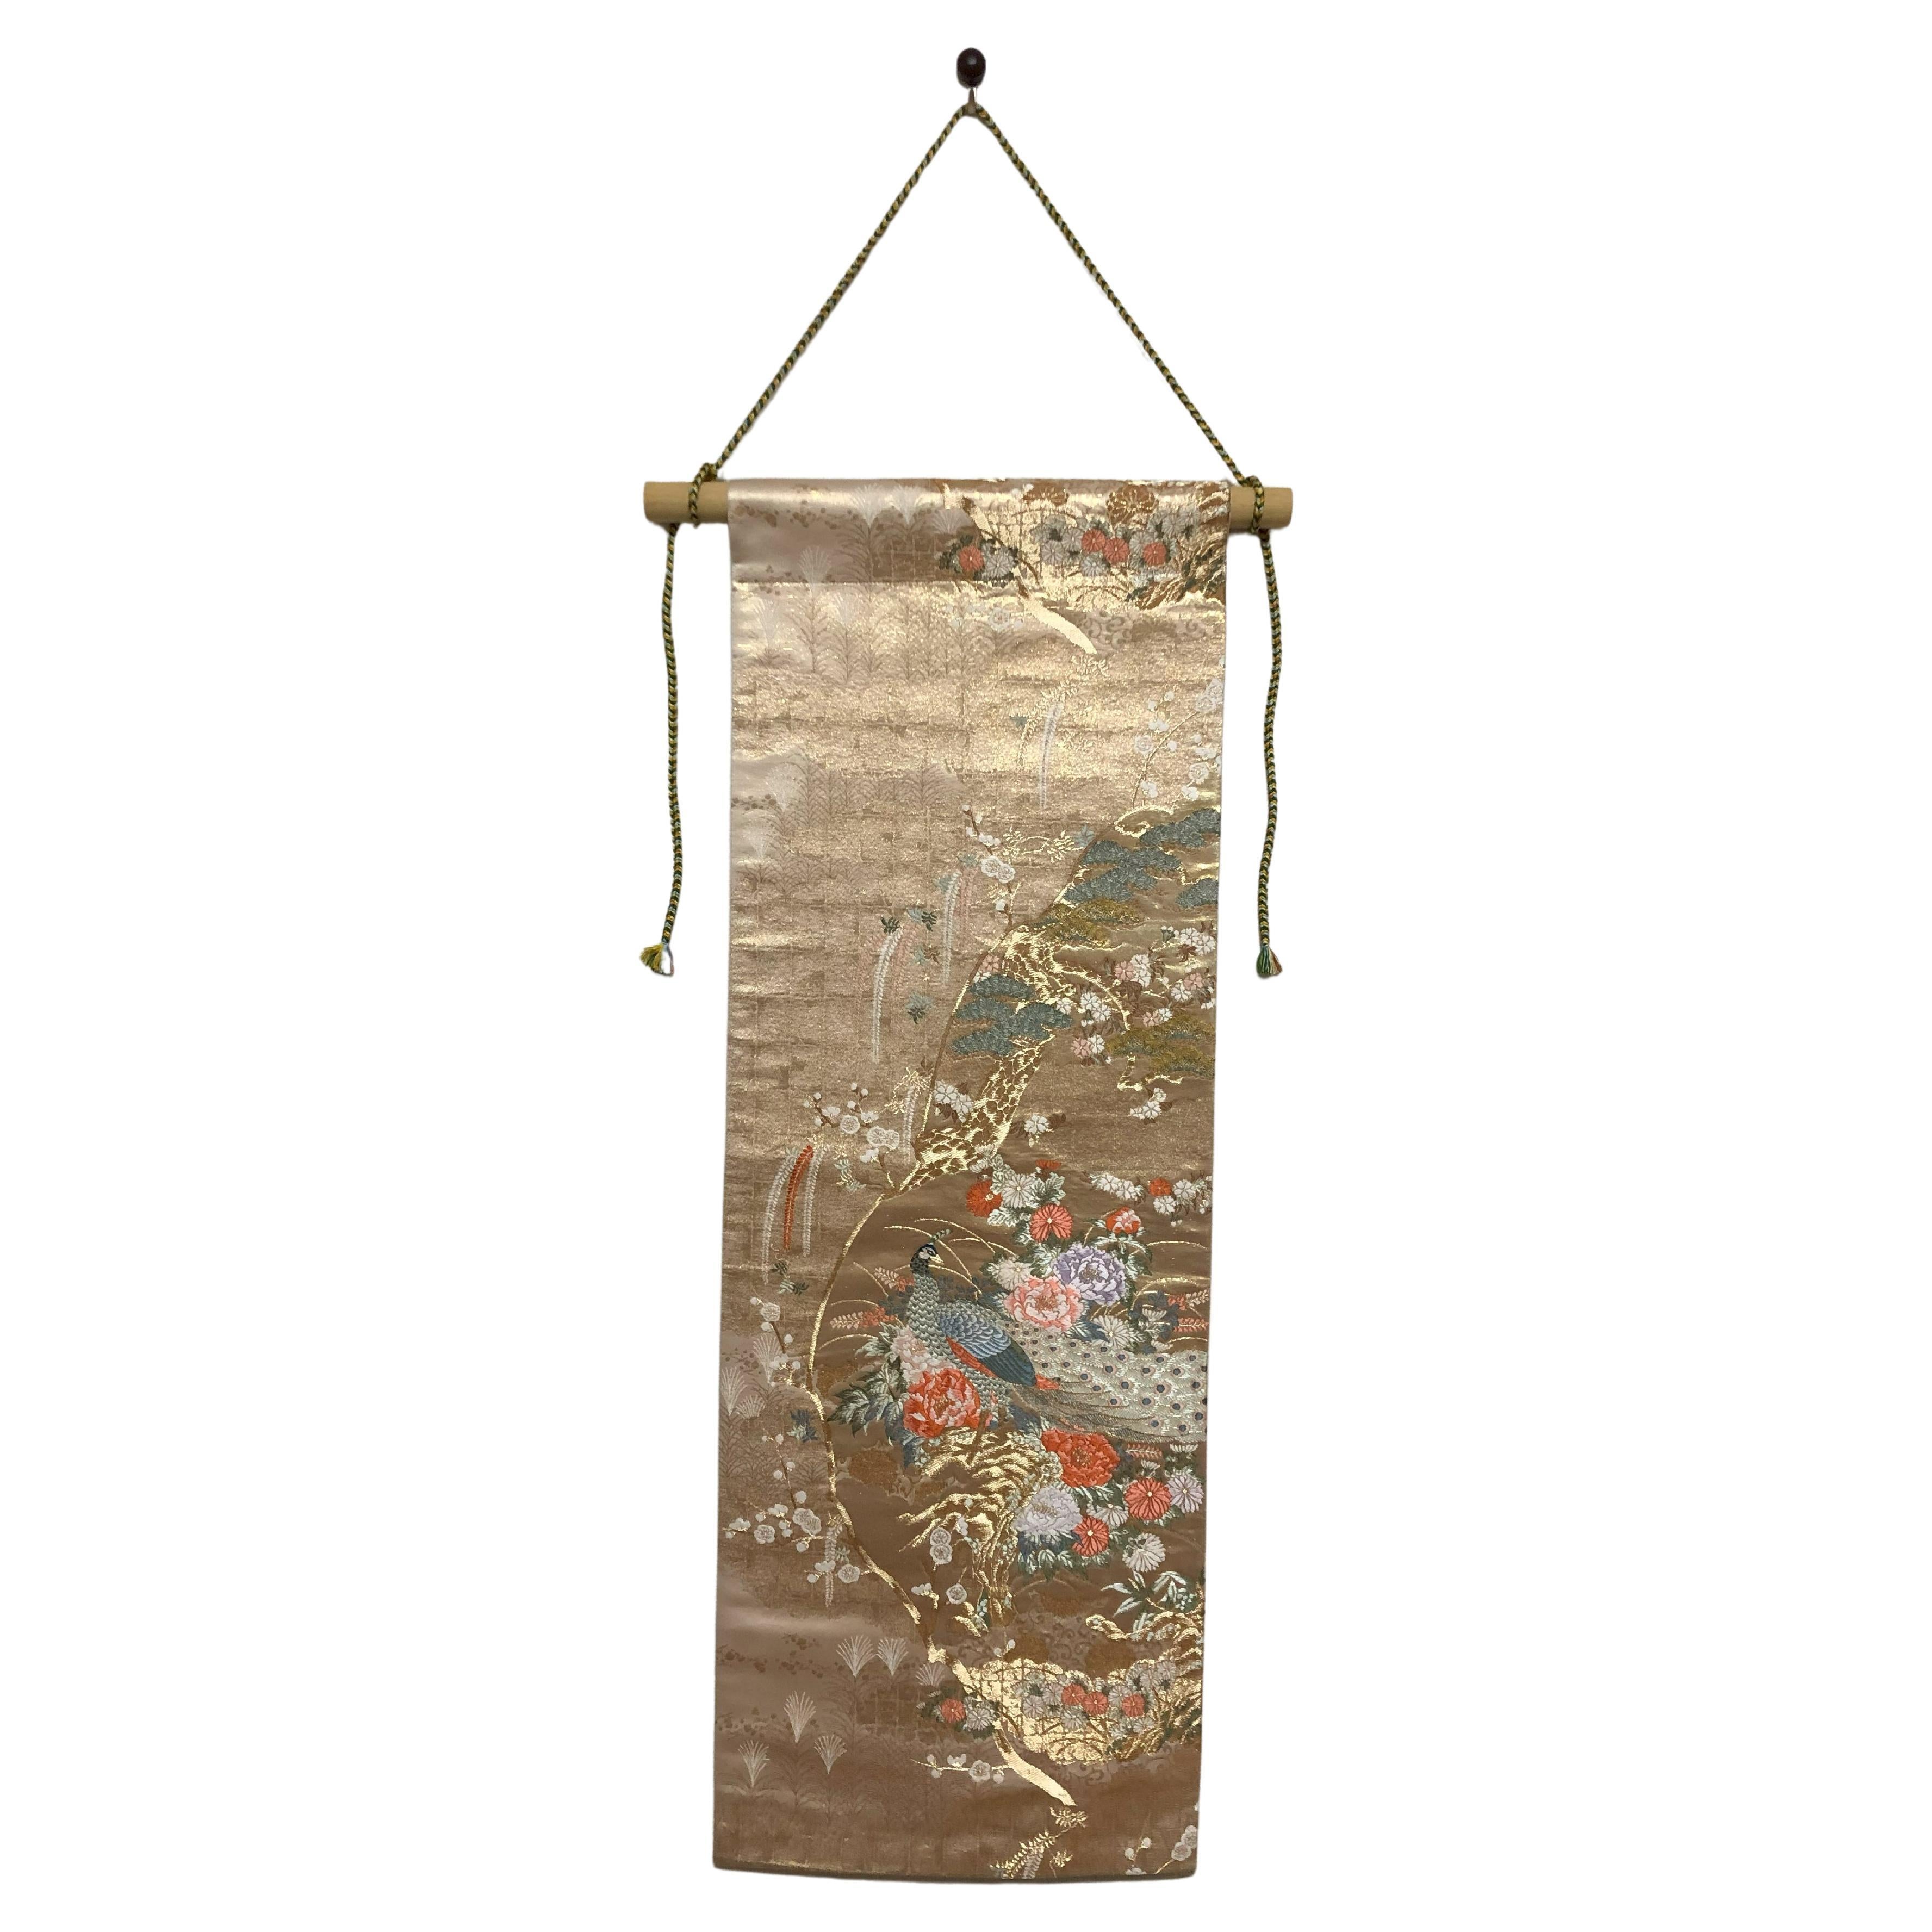 Kimono Art / Japanese Art / Kimono Tapestry, "The Queen of Peacocks" For Sale